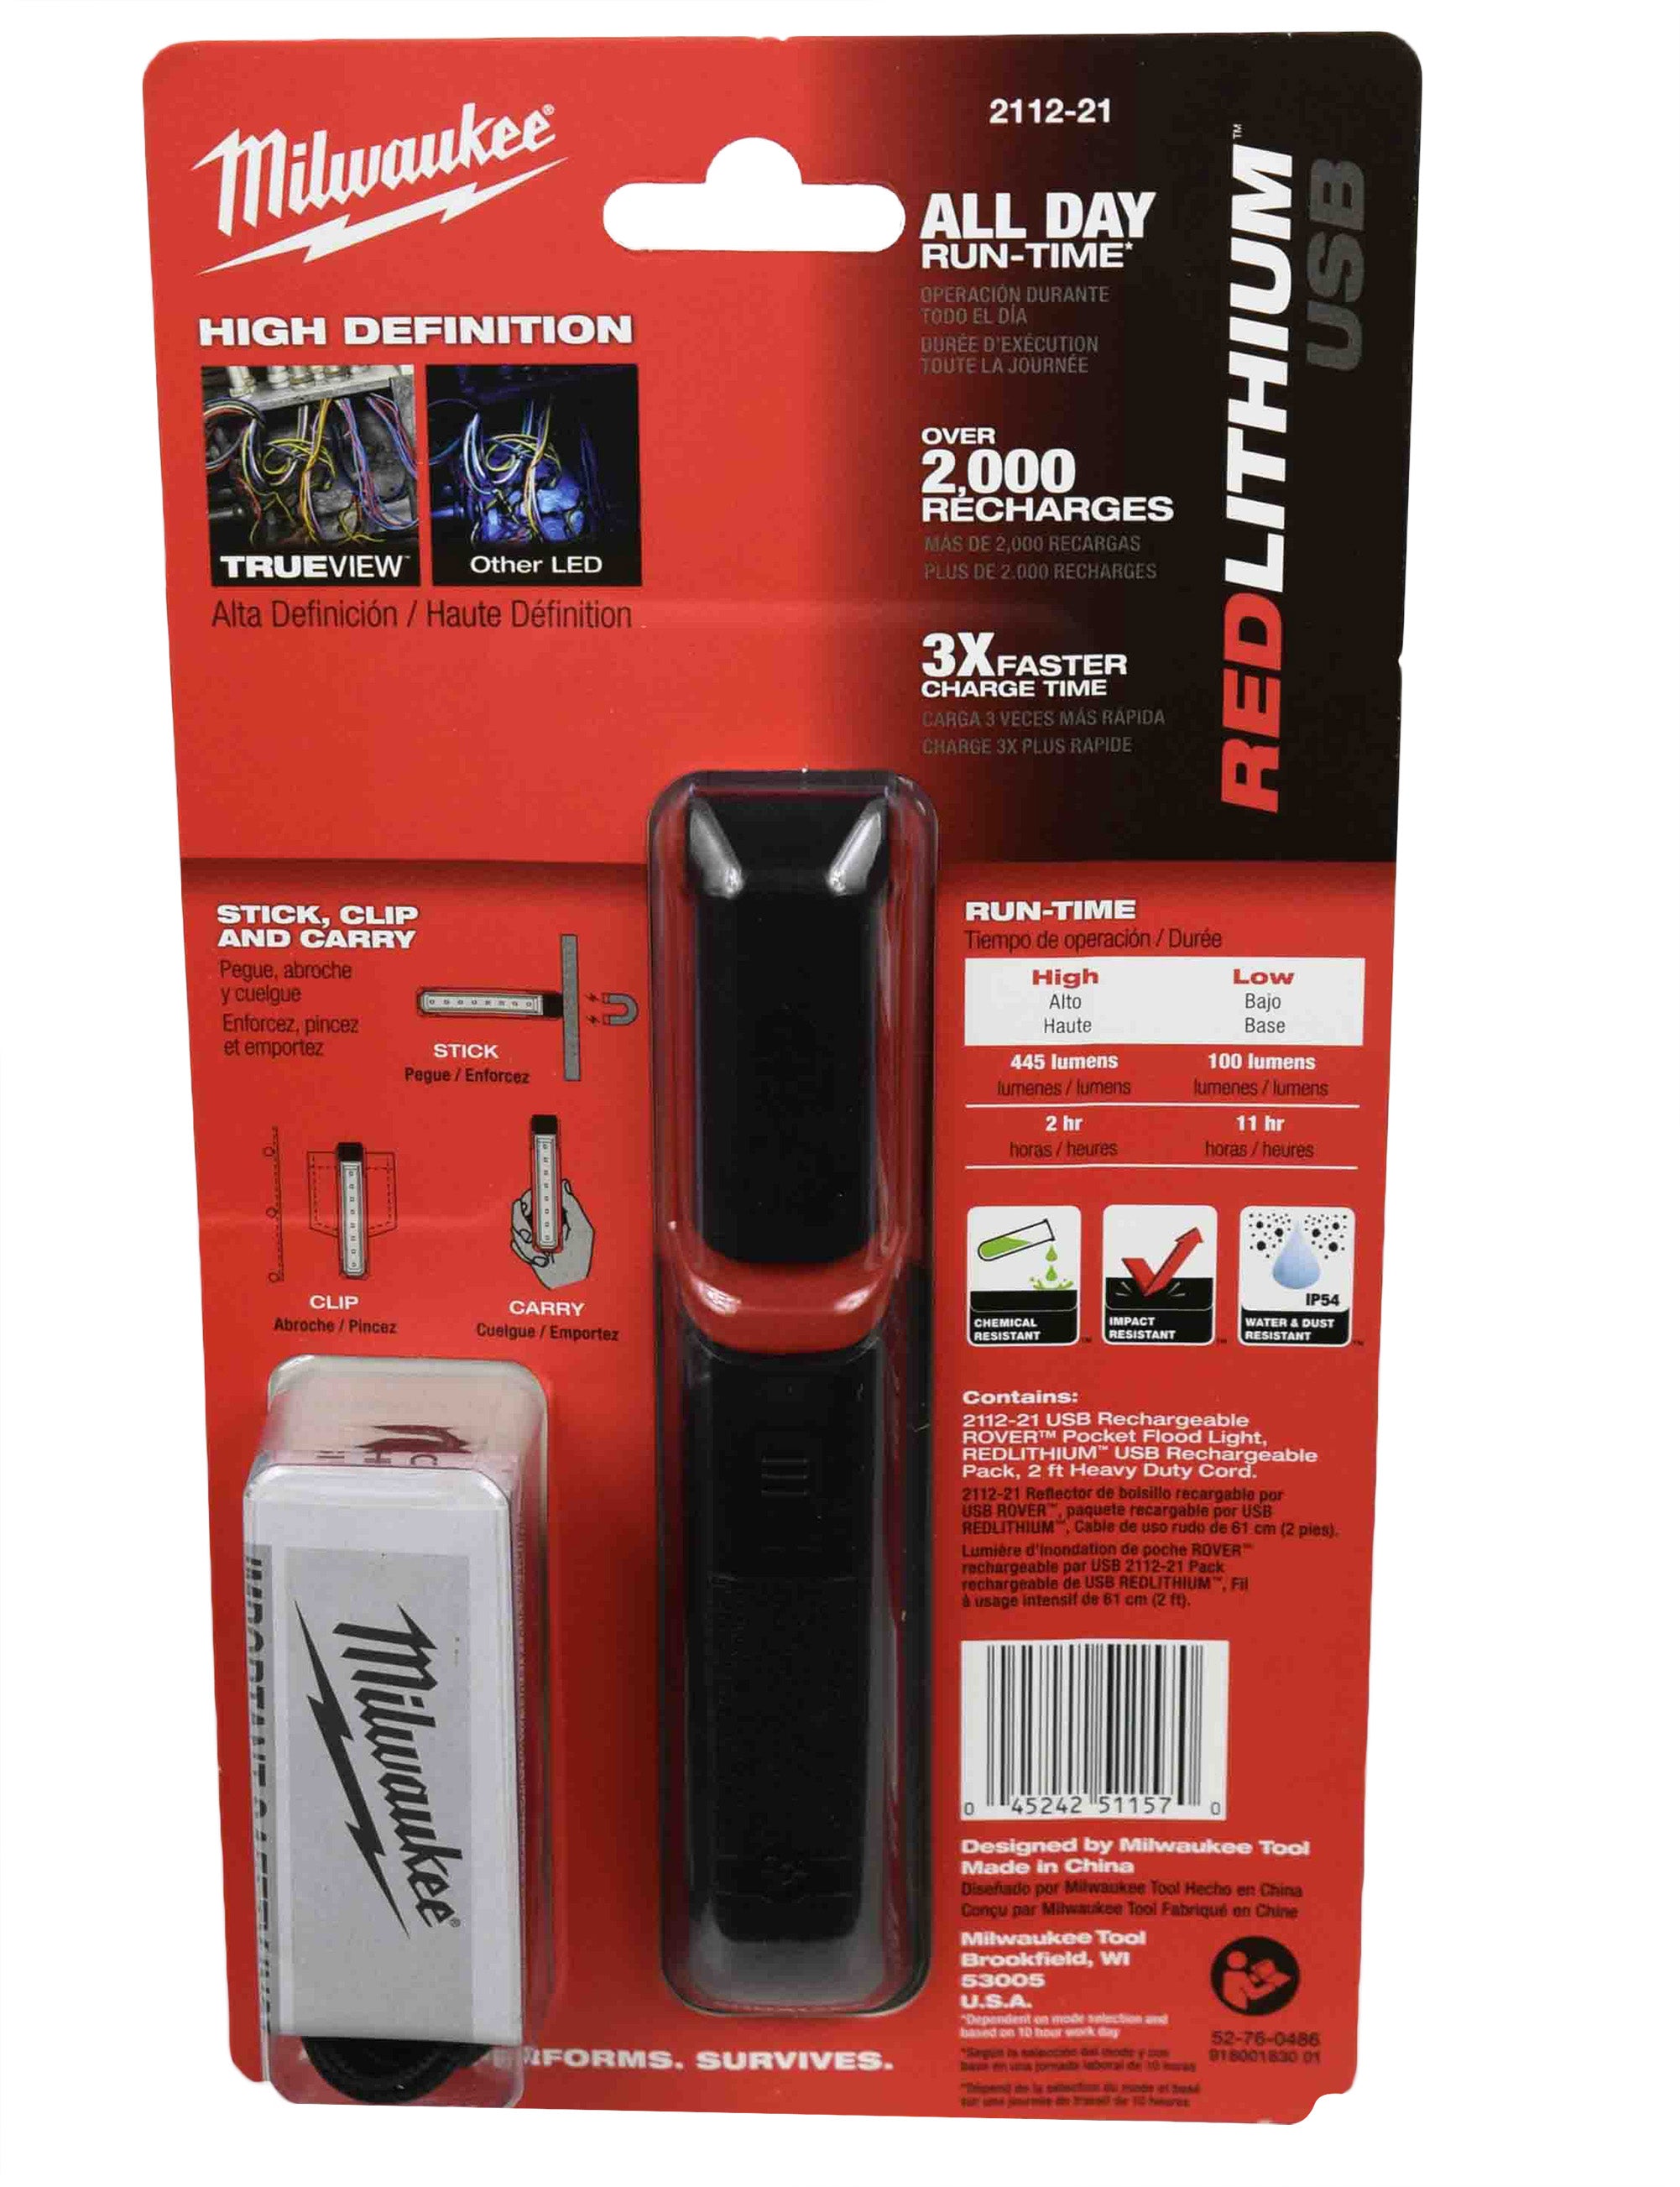 Milwaukee 2112-21 USB Rechargeable RedLithium Rover Pocket Flood Light